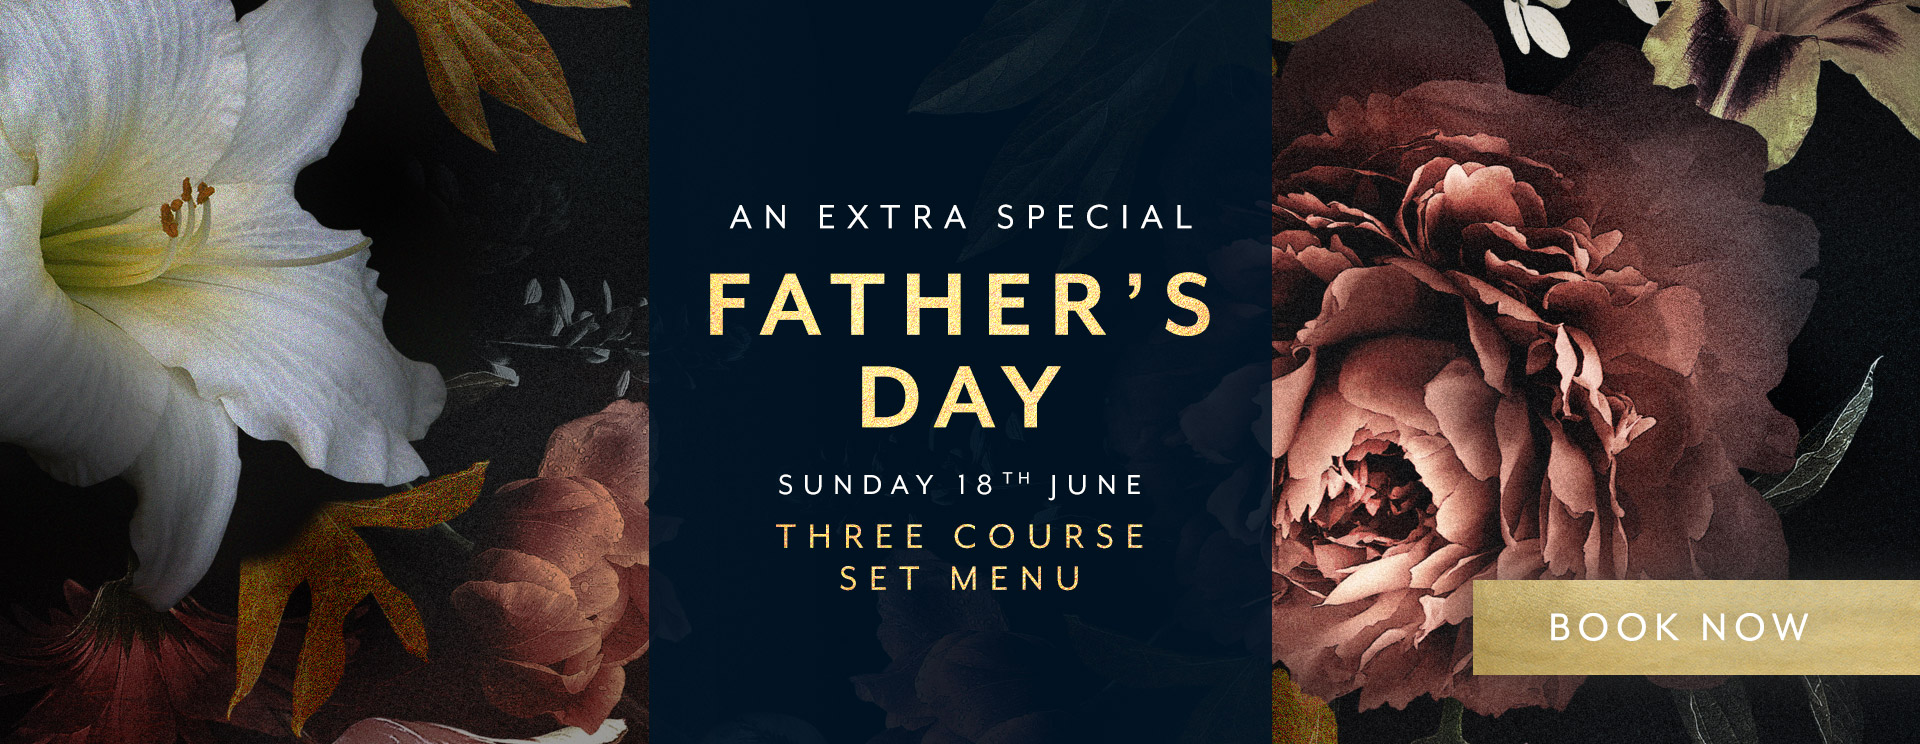 Father’s Day menu Birmingham